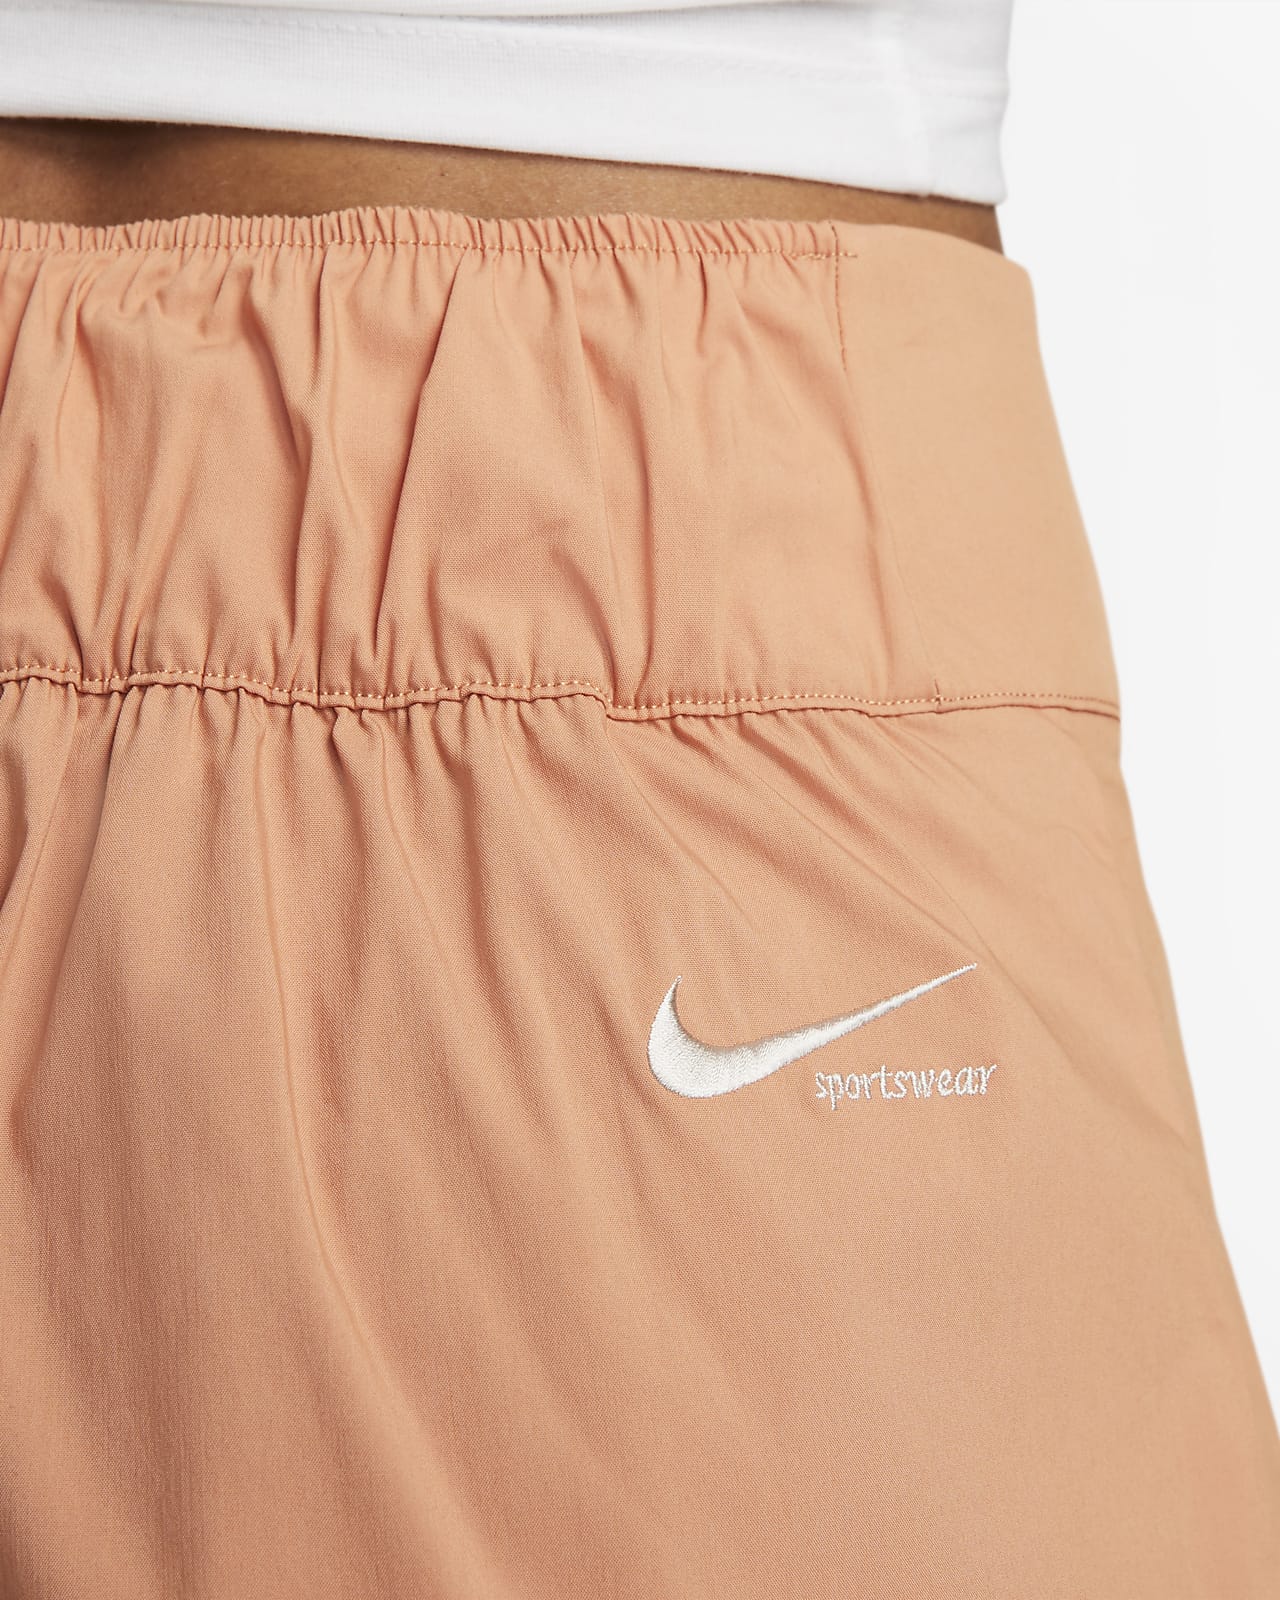 Women\'s Sportswear Nike Collection Shorts. Trouser